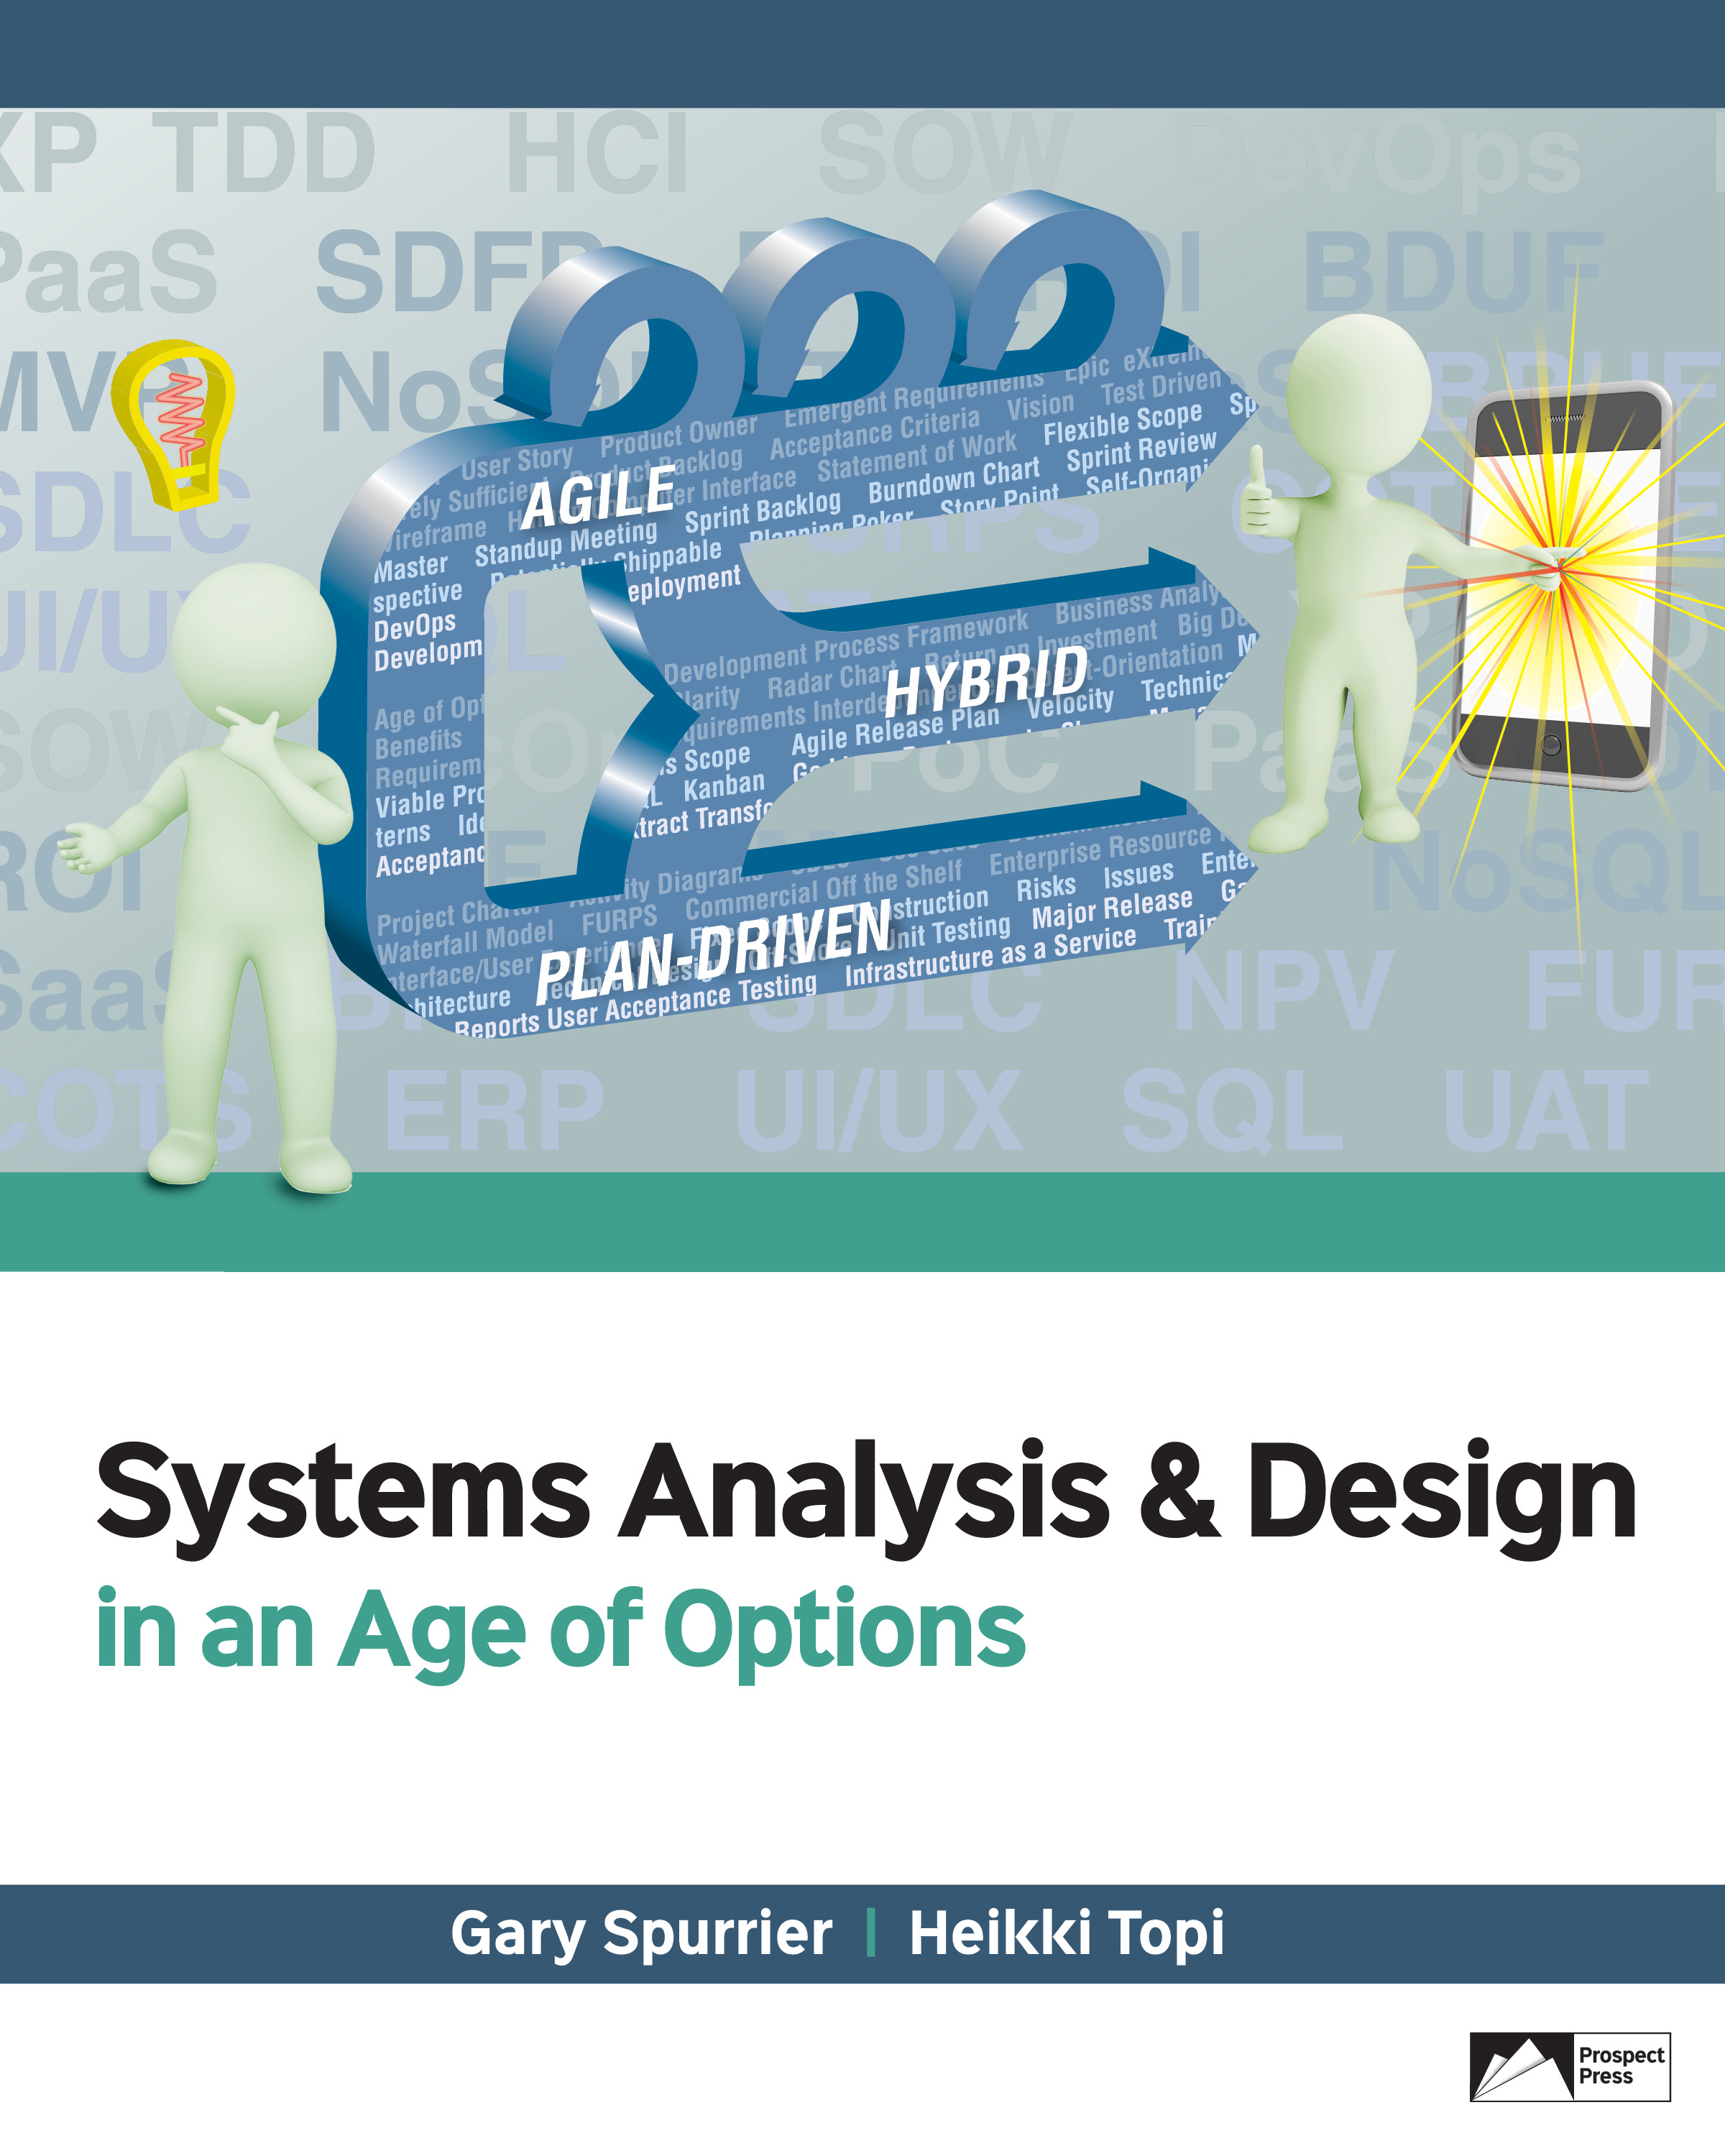 Spurrier: Systems Analysis & Design